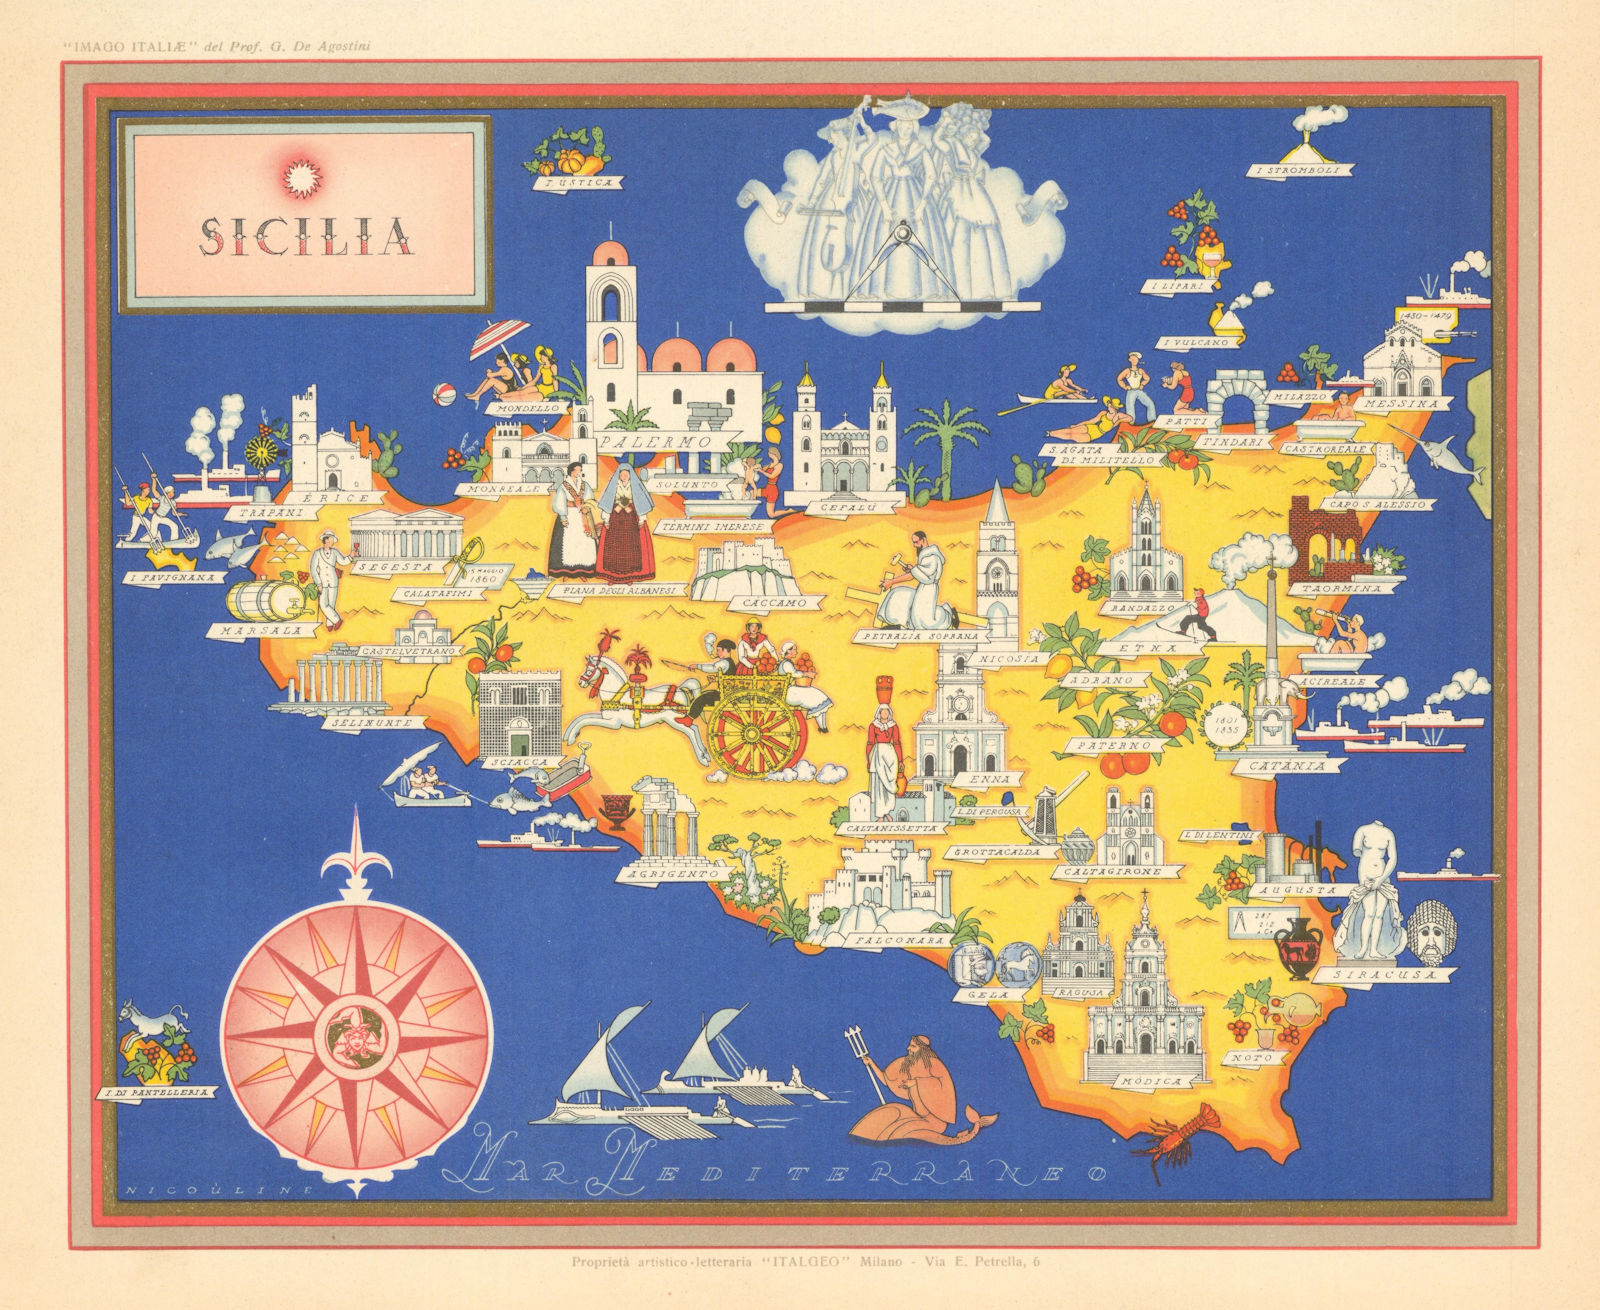 Sicilia / Sicily pictorial map by Vsevolode Nicouline. Italgeo/Agostini c1950